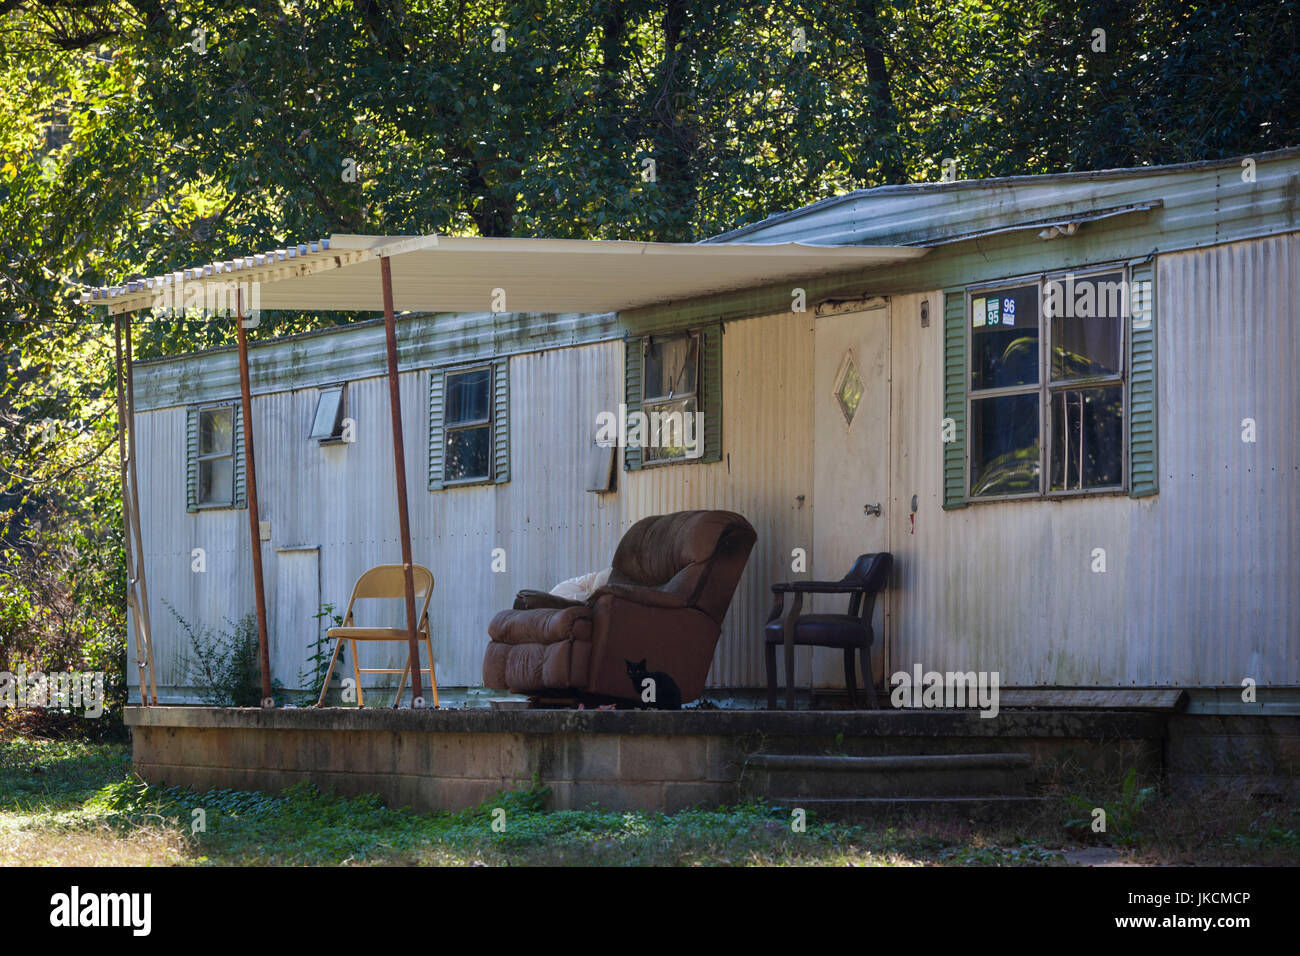 USA, Georgia, Athens, old mobile home, trailer Stock Photo